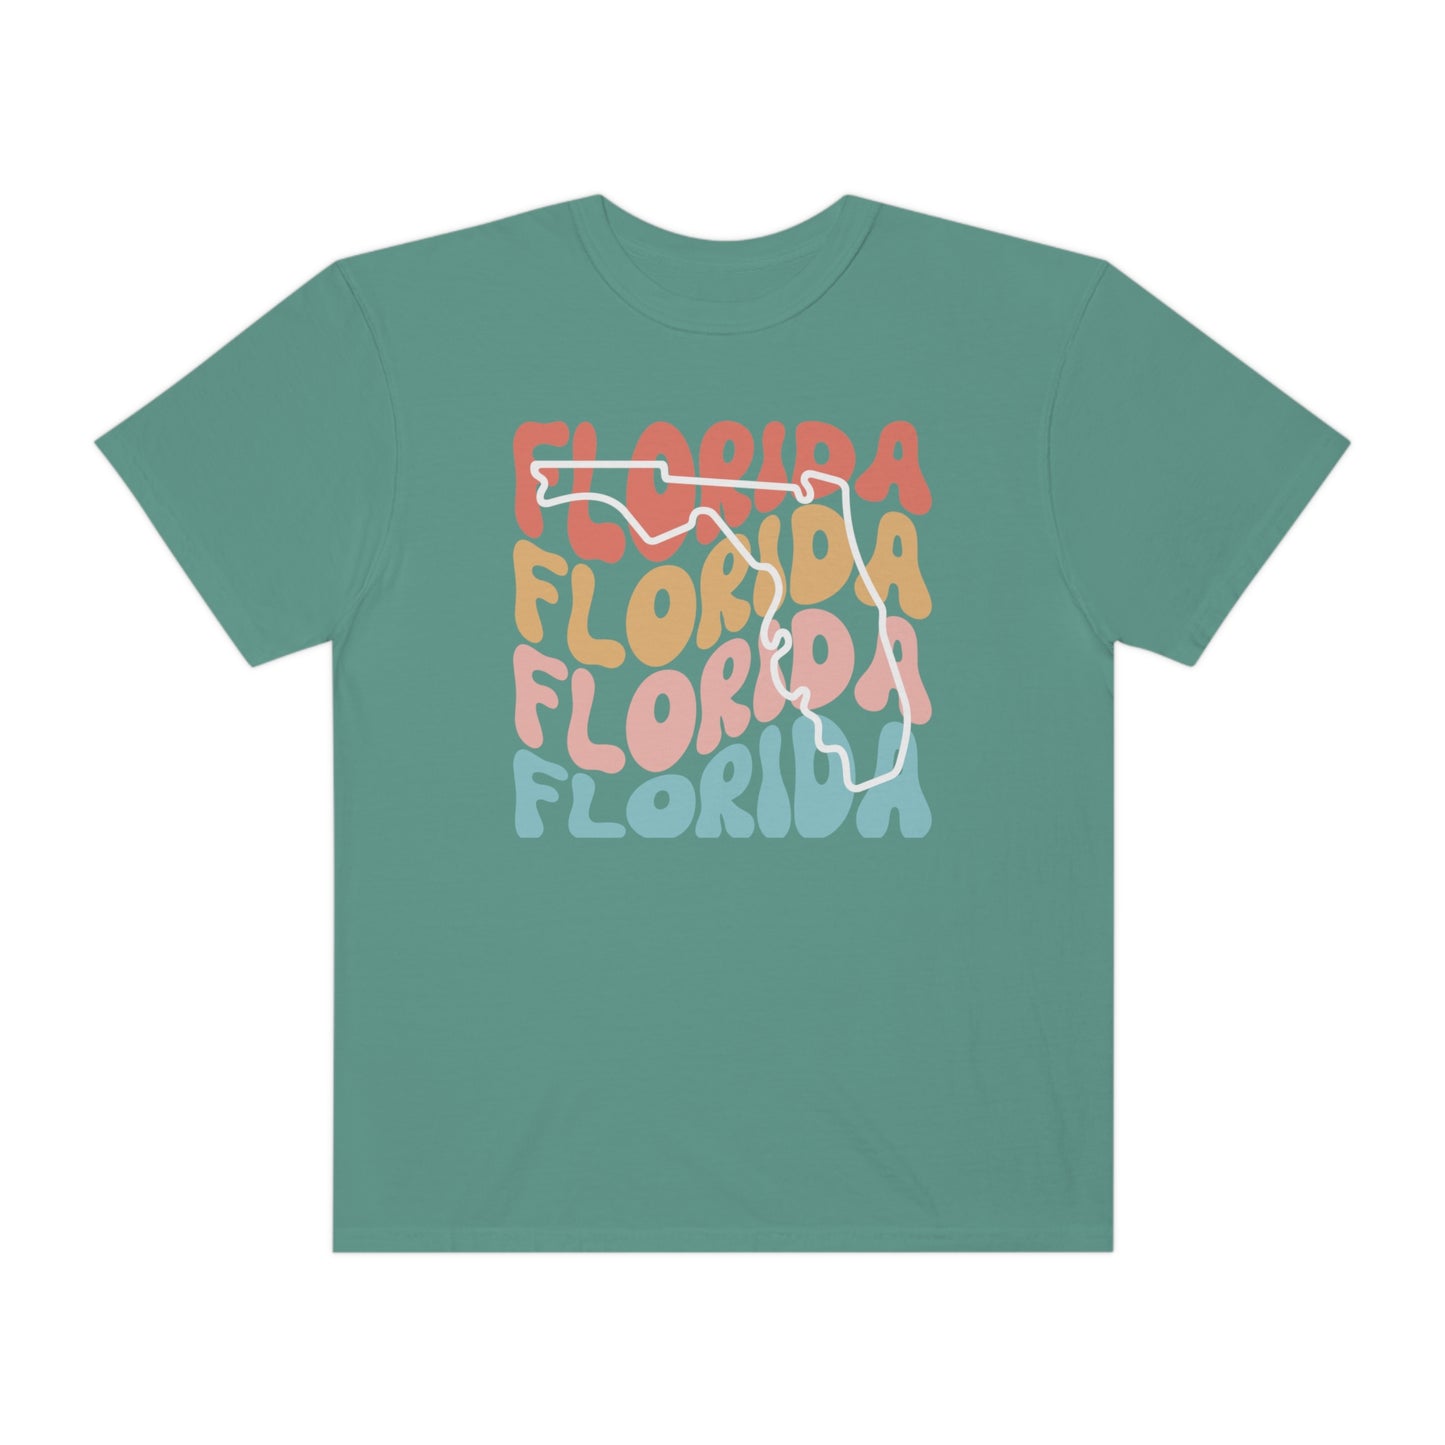 Florida State Shirt, Florida Travel Shirt, Florida Gifts, Beach Vacation TShirt, Summer Clothing, FL Sports Shirt, Retro Florida Graphic Tee